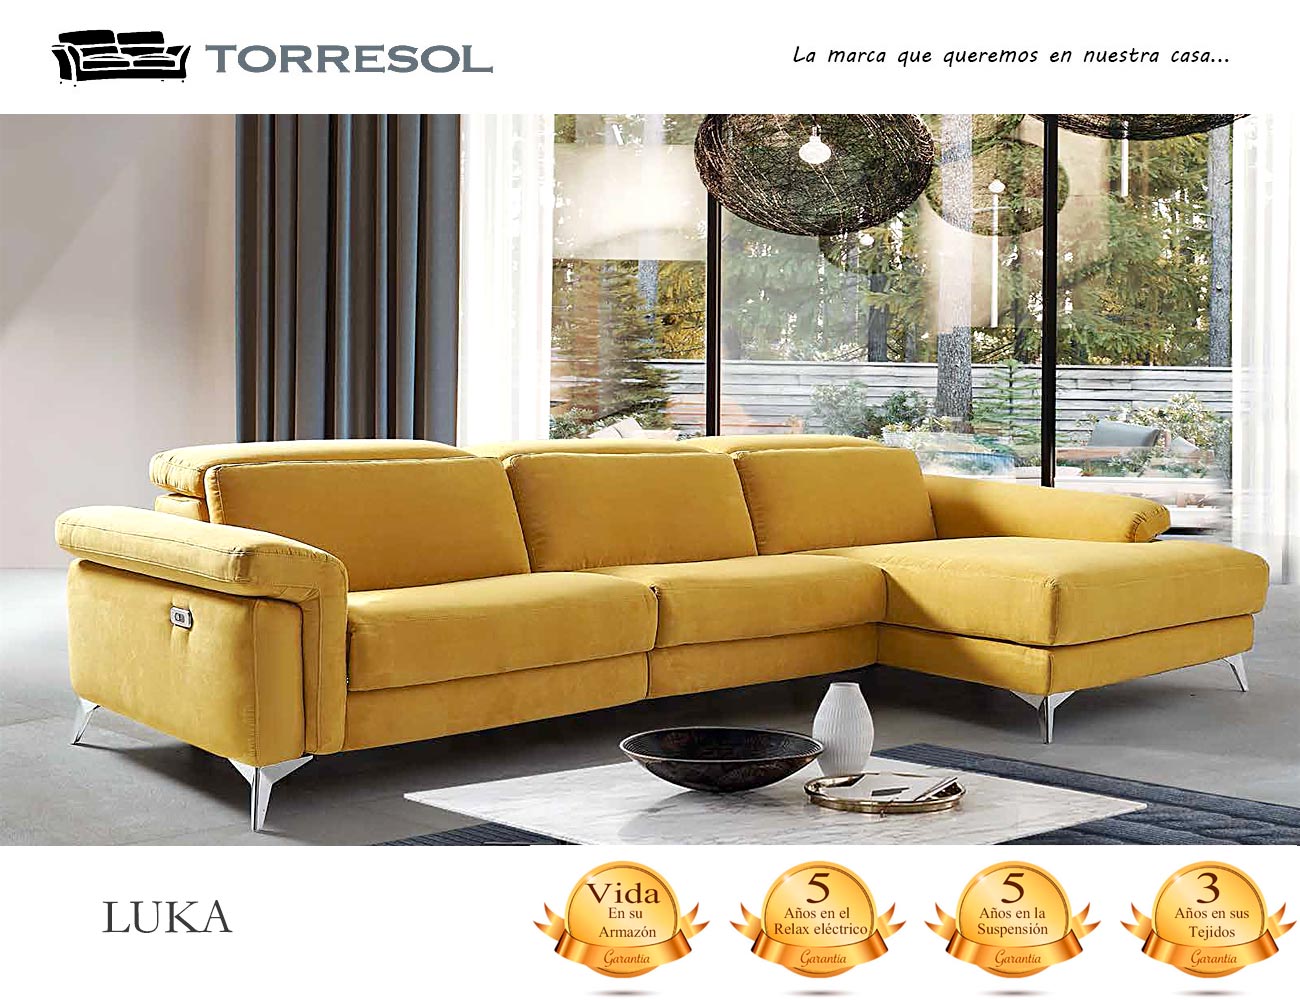 Sofa luka torresol